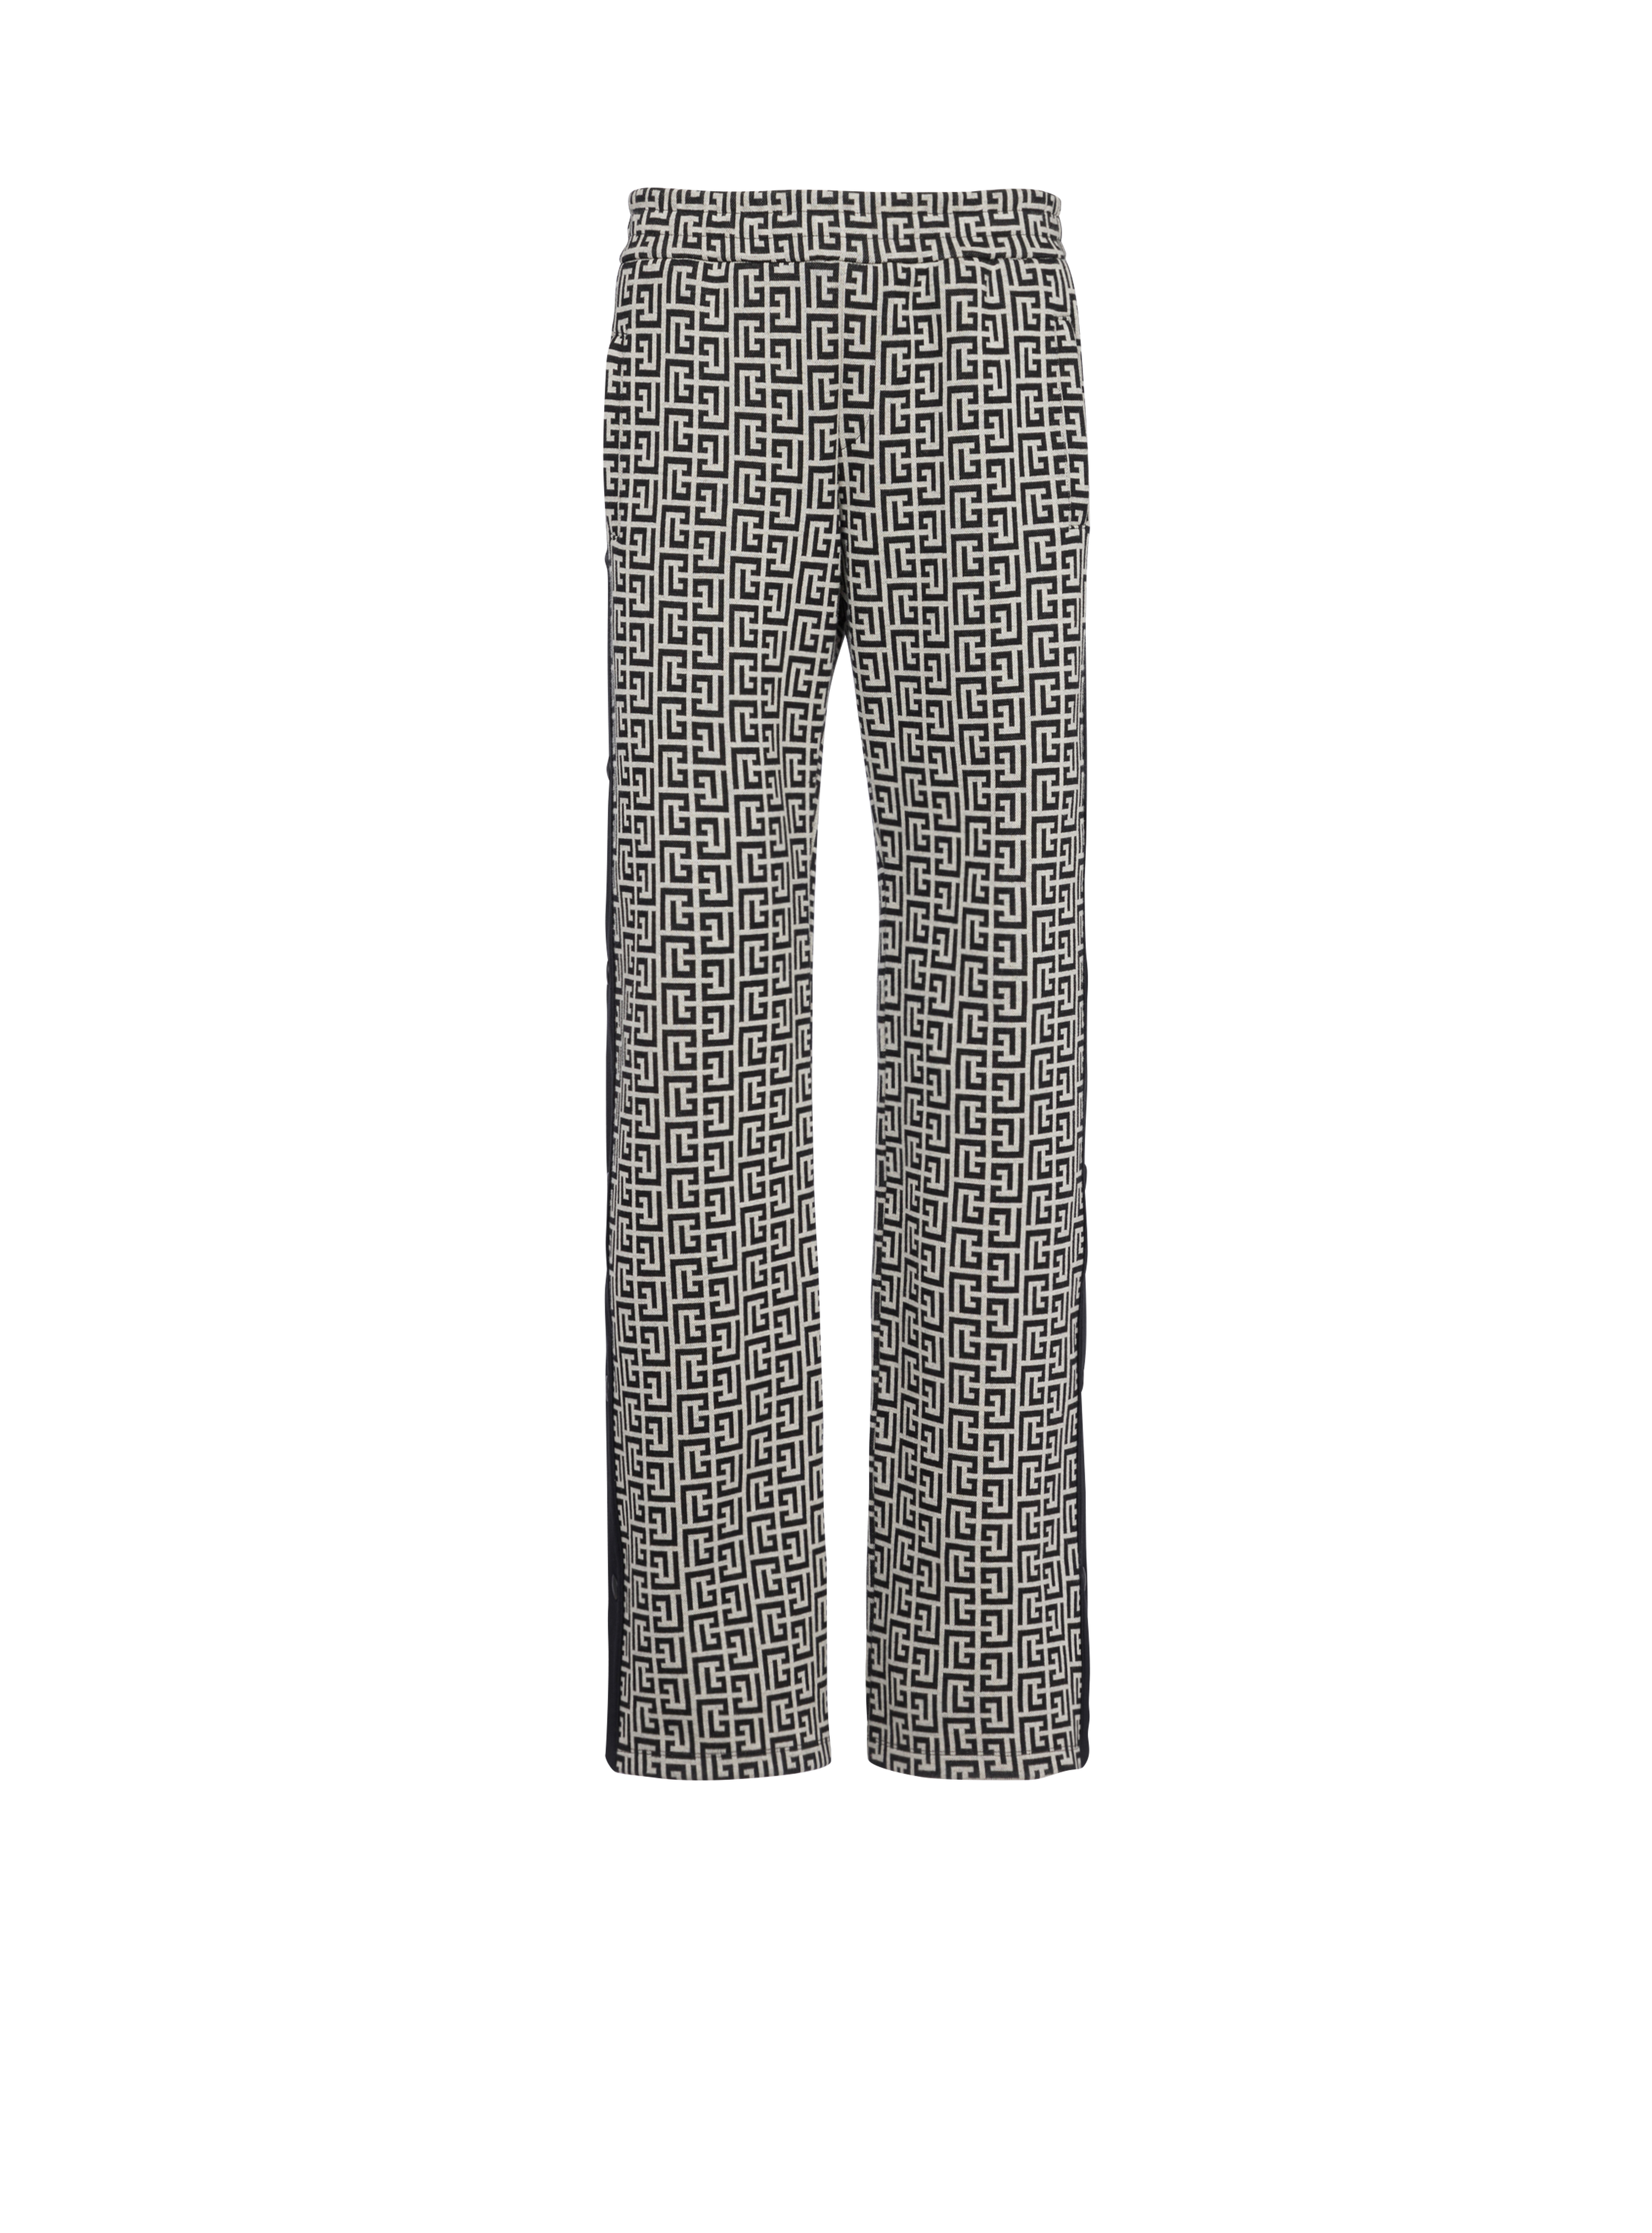 Wide-legged pyjama pants with Balmain monogram and snap buttons, black